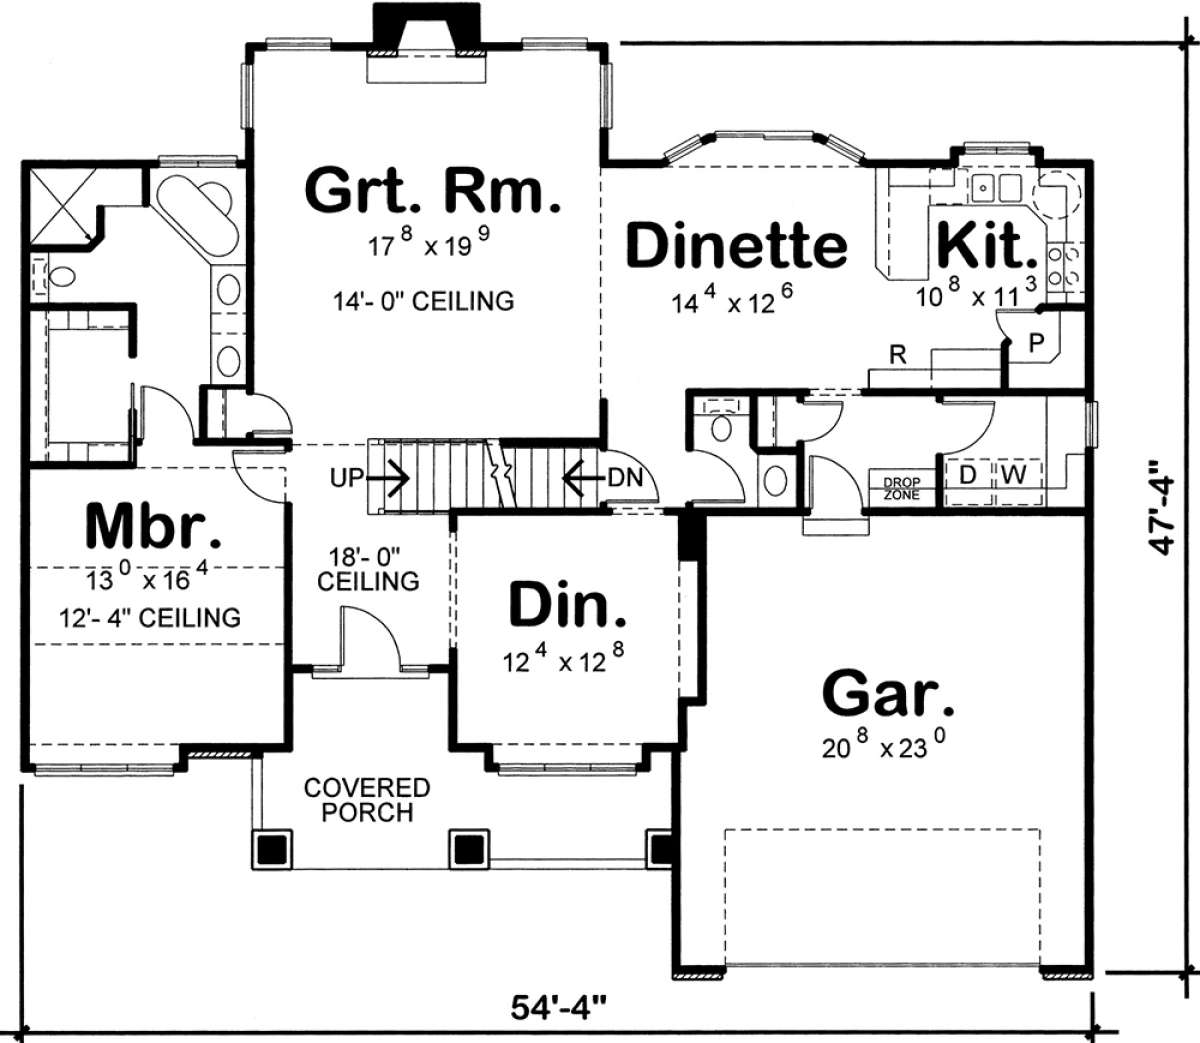 Craftsman Plan: 2,196 Square Feet, 4 Bedrooms, 2.5 Bathrooms - 402-01537